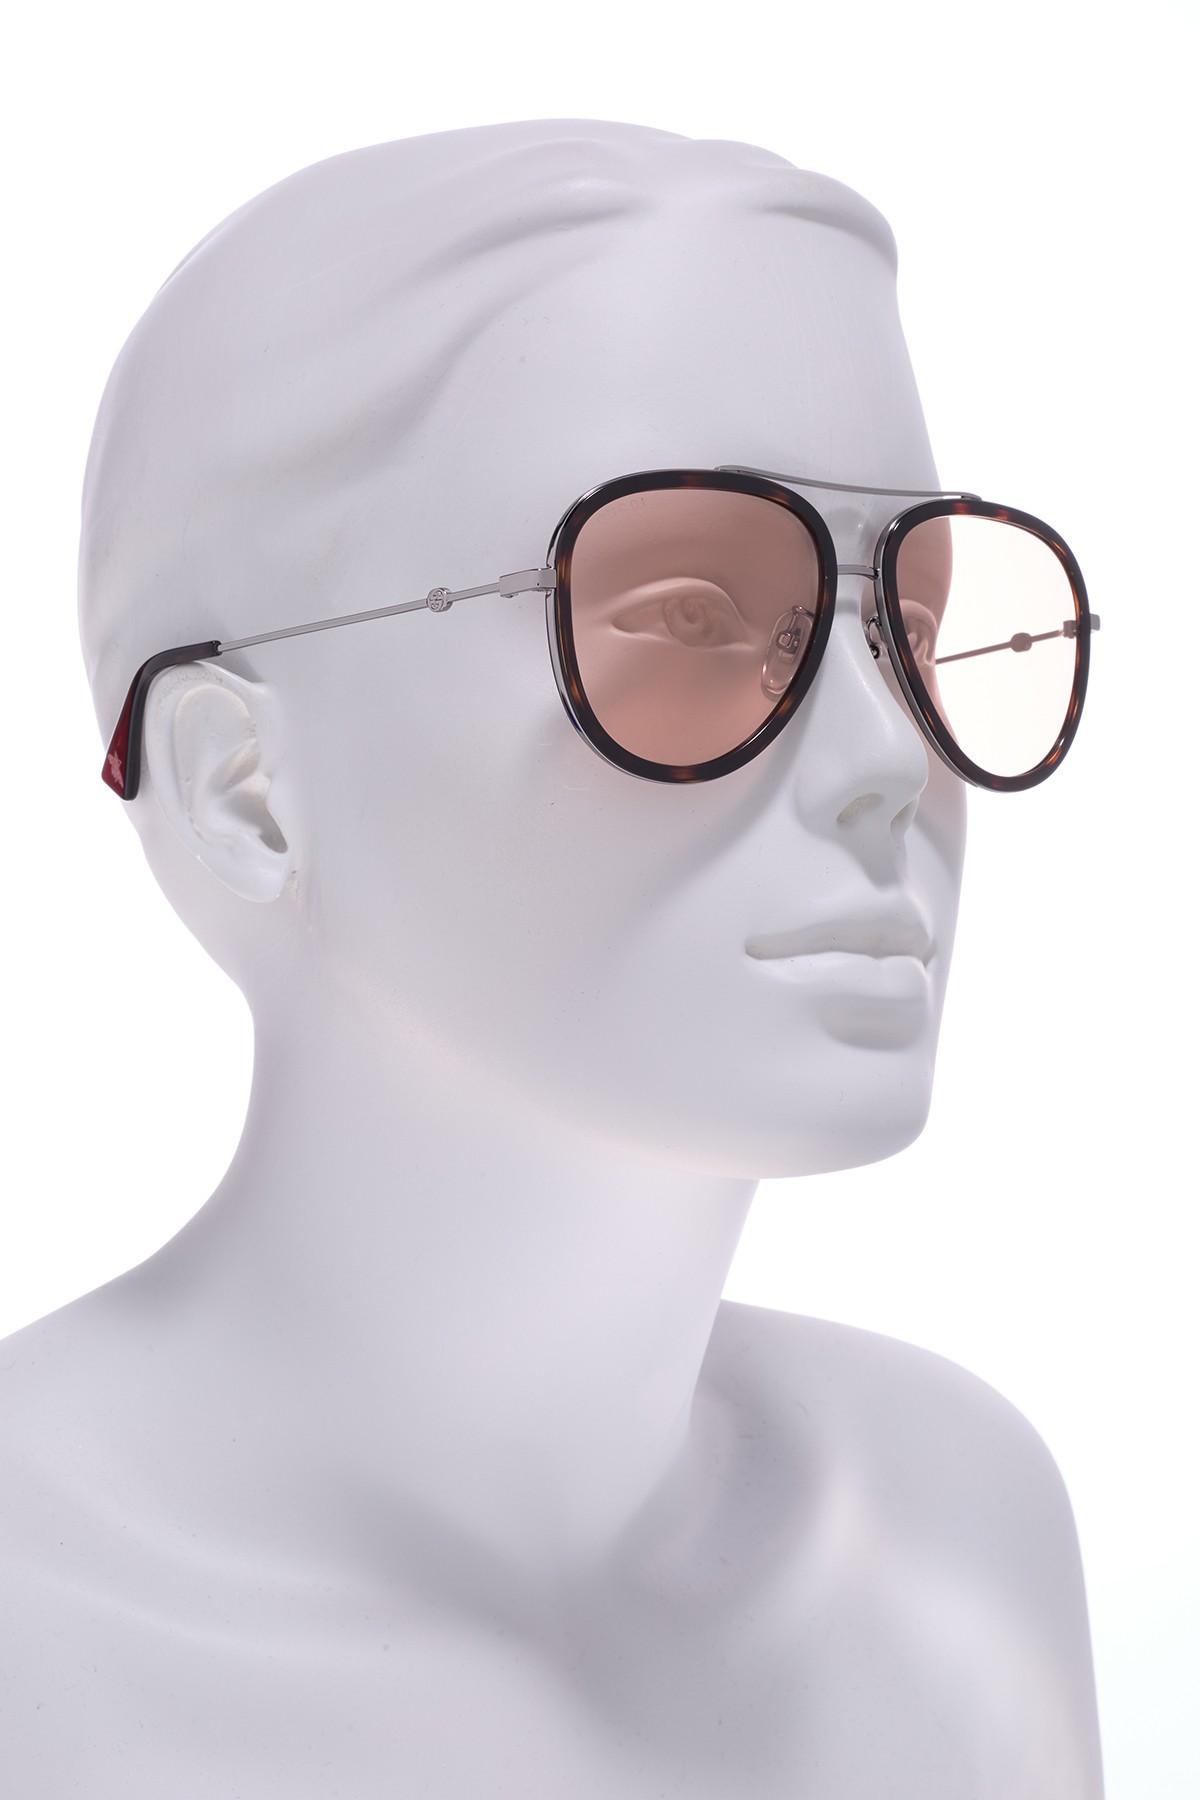 gucci 57mm sunglasses